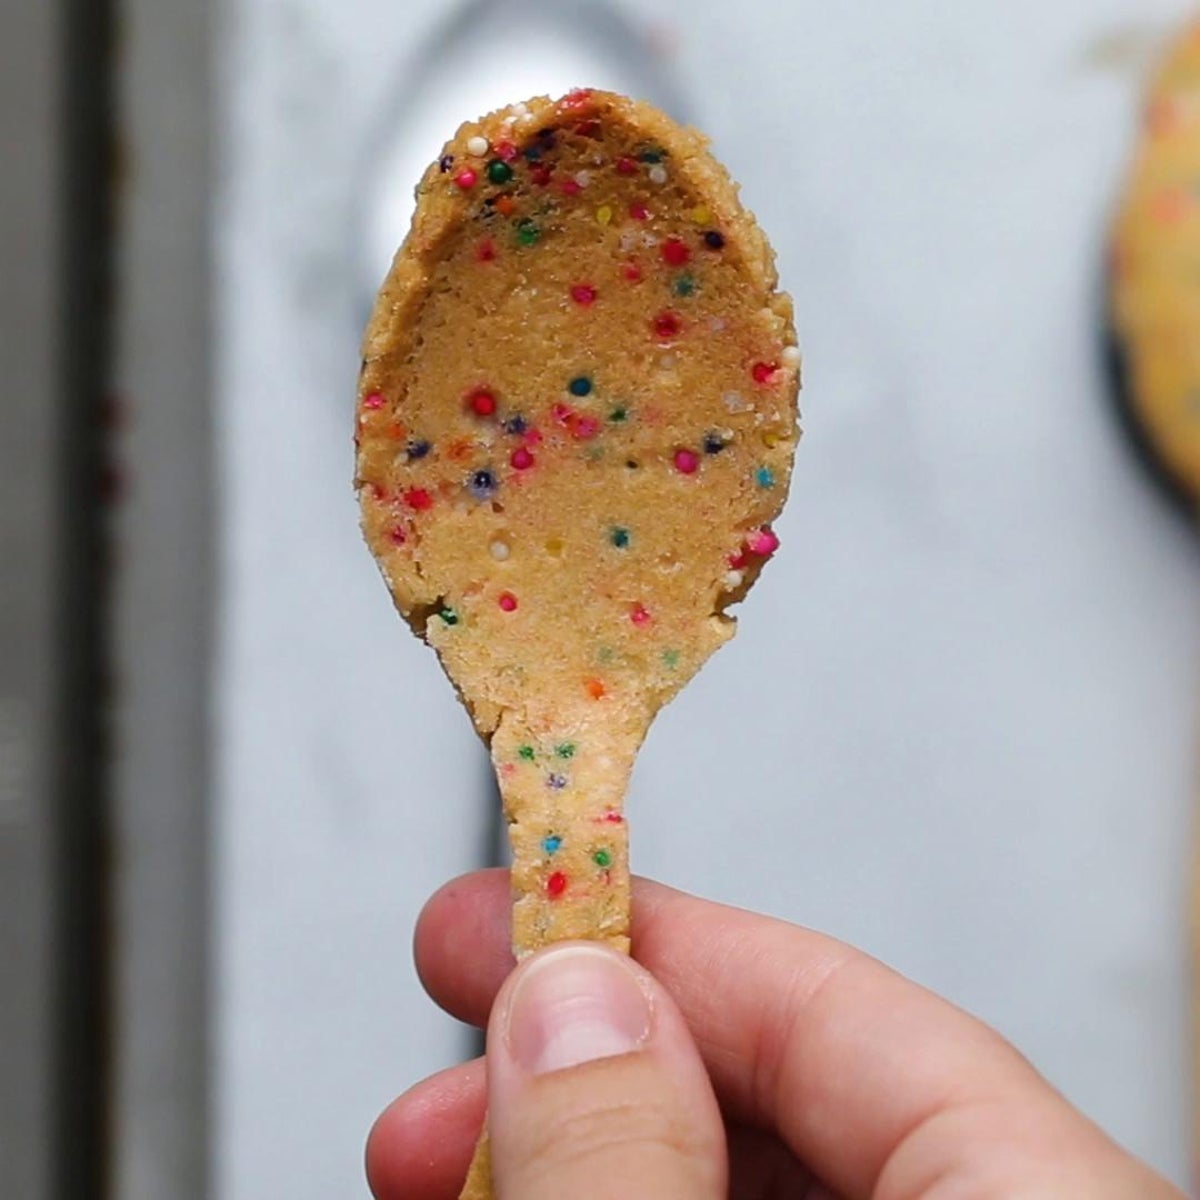 It is new, it is edible, it is incredible! It's a cookie spoon.